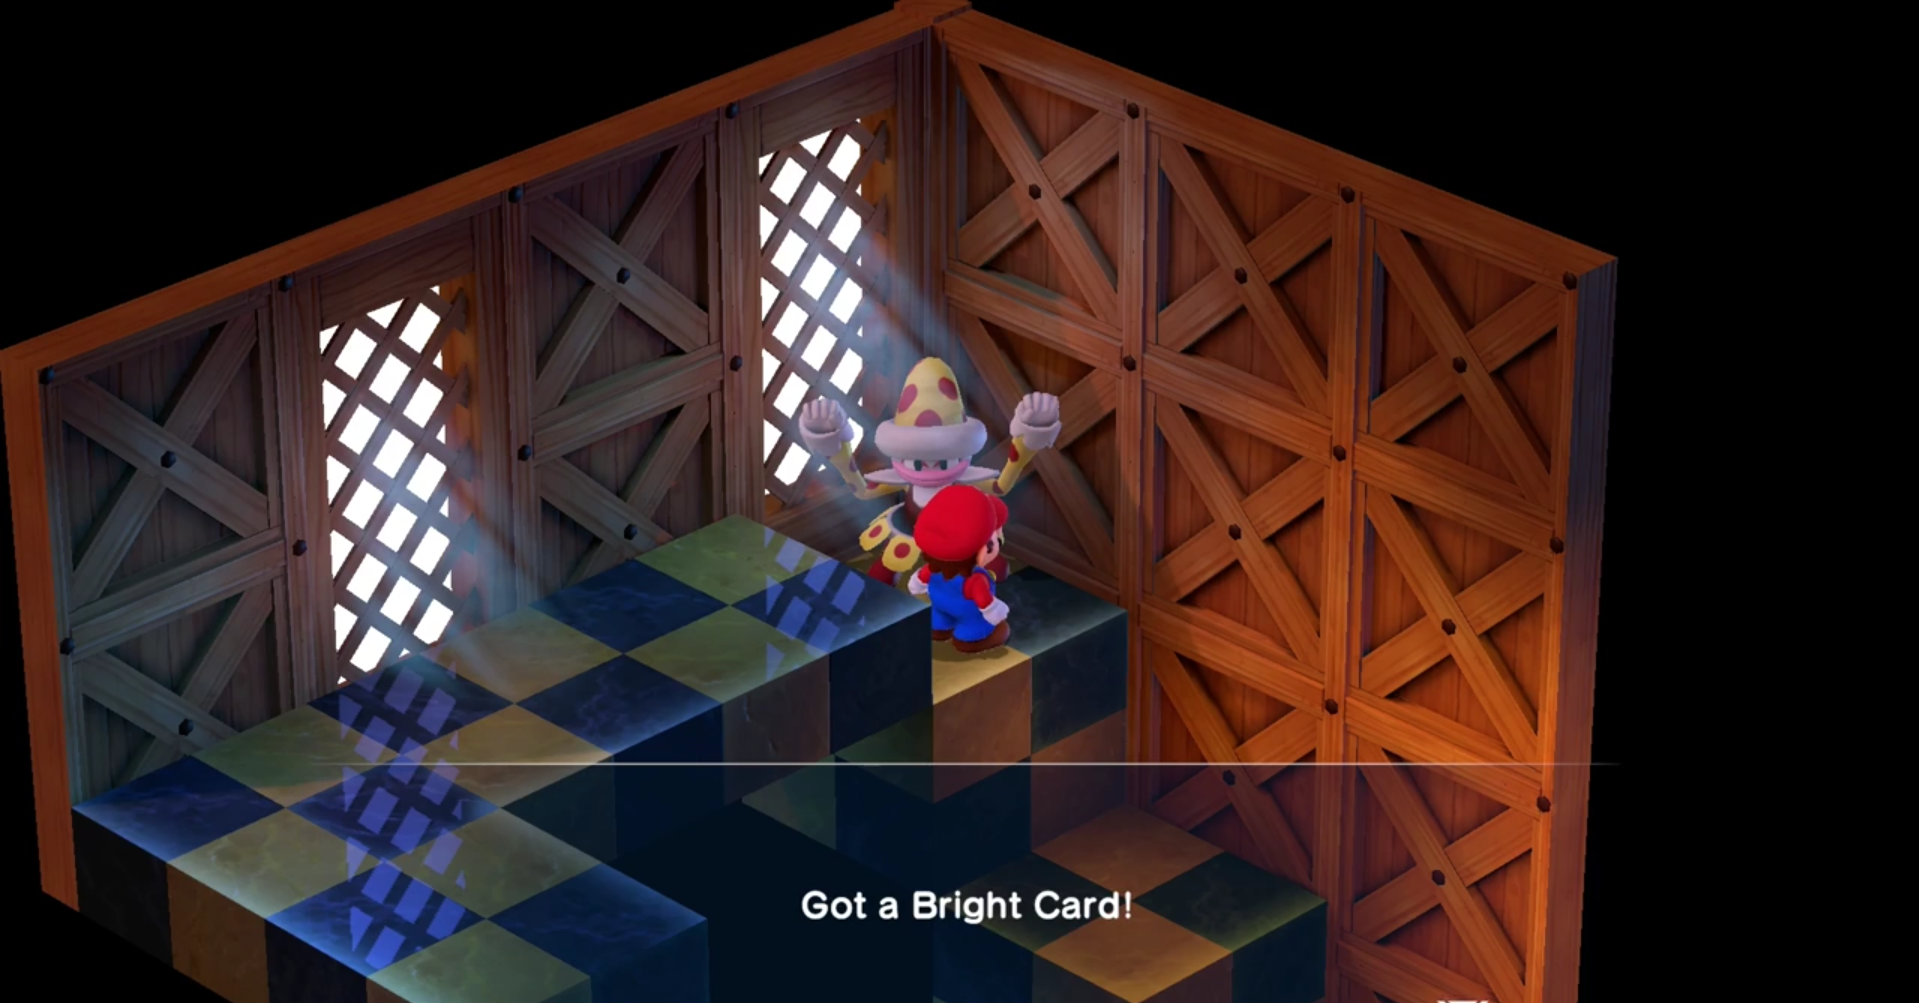 Mario getting the Bright Card in Super Mario RPG.